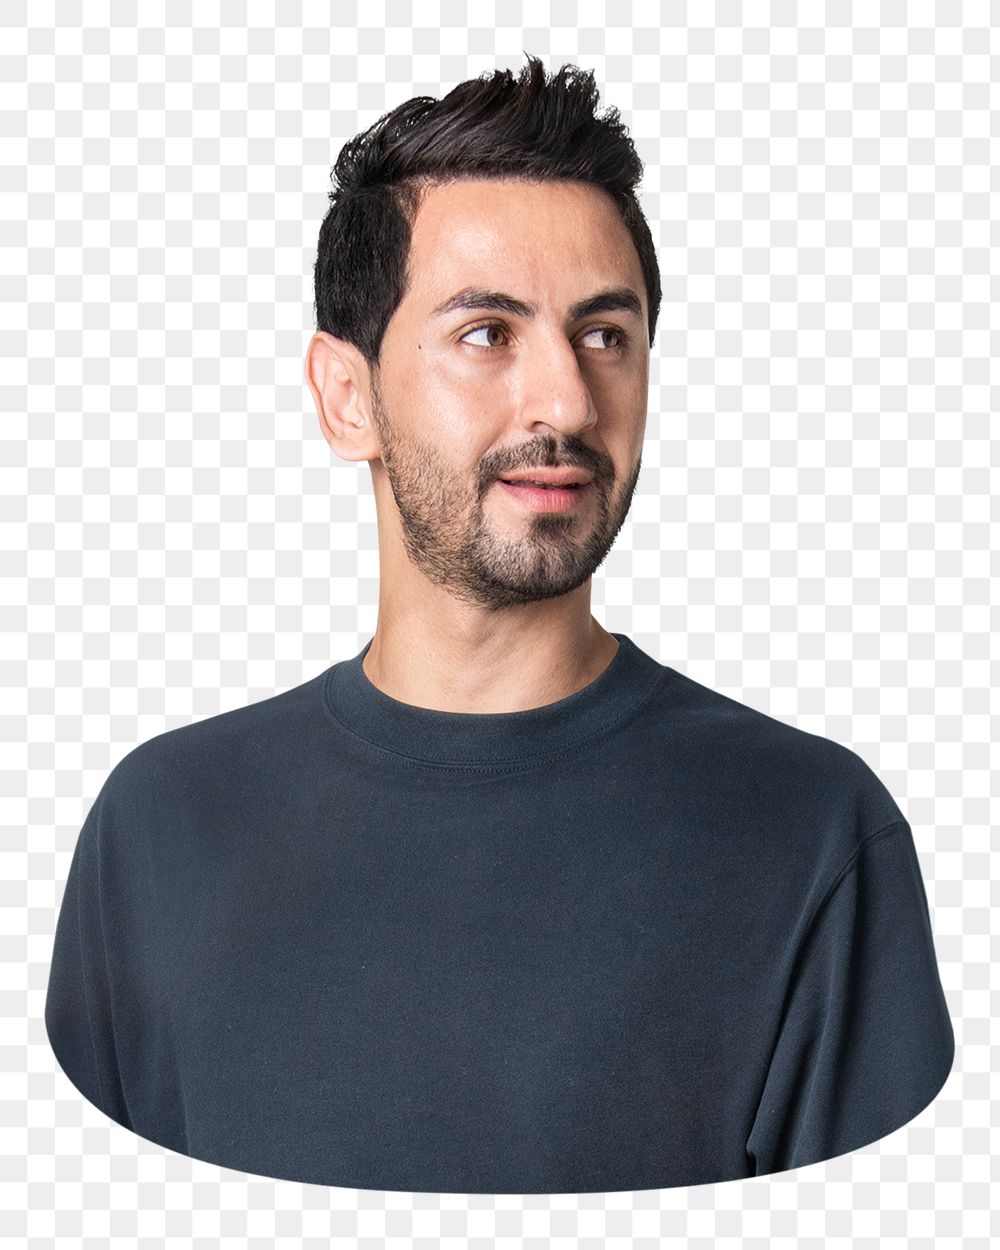 Men's casual wear png sticker, transparent background